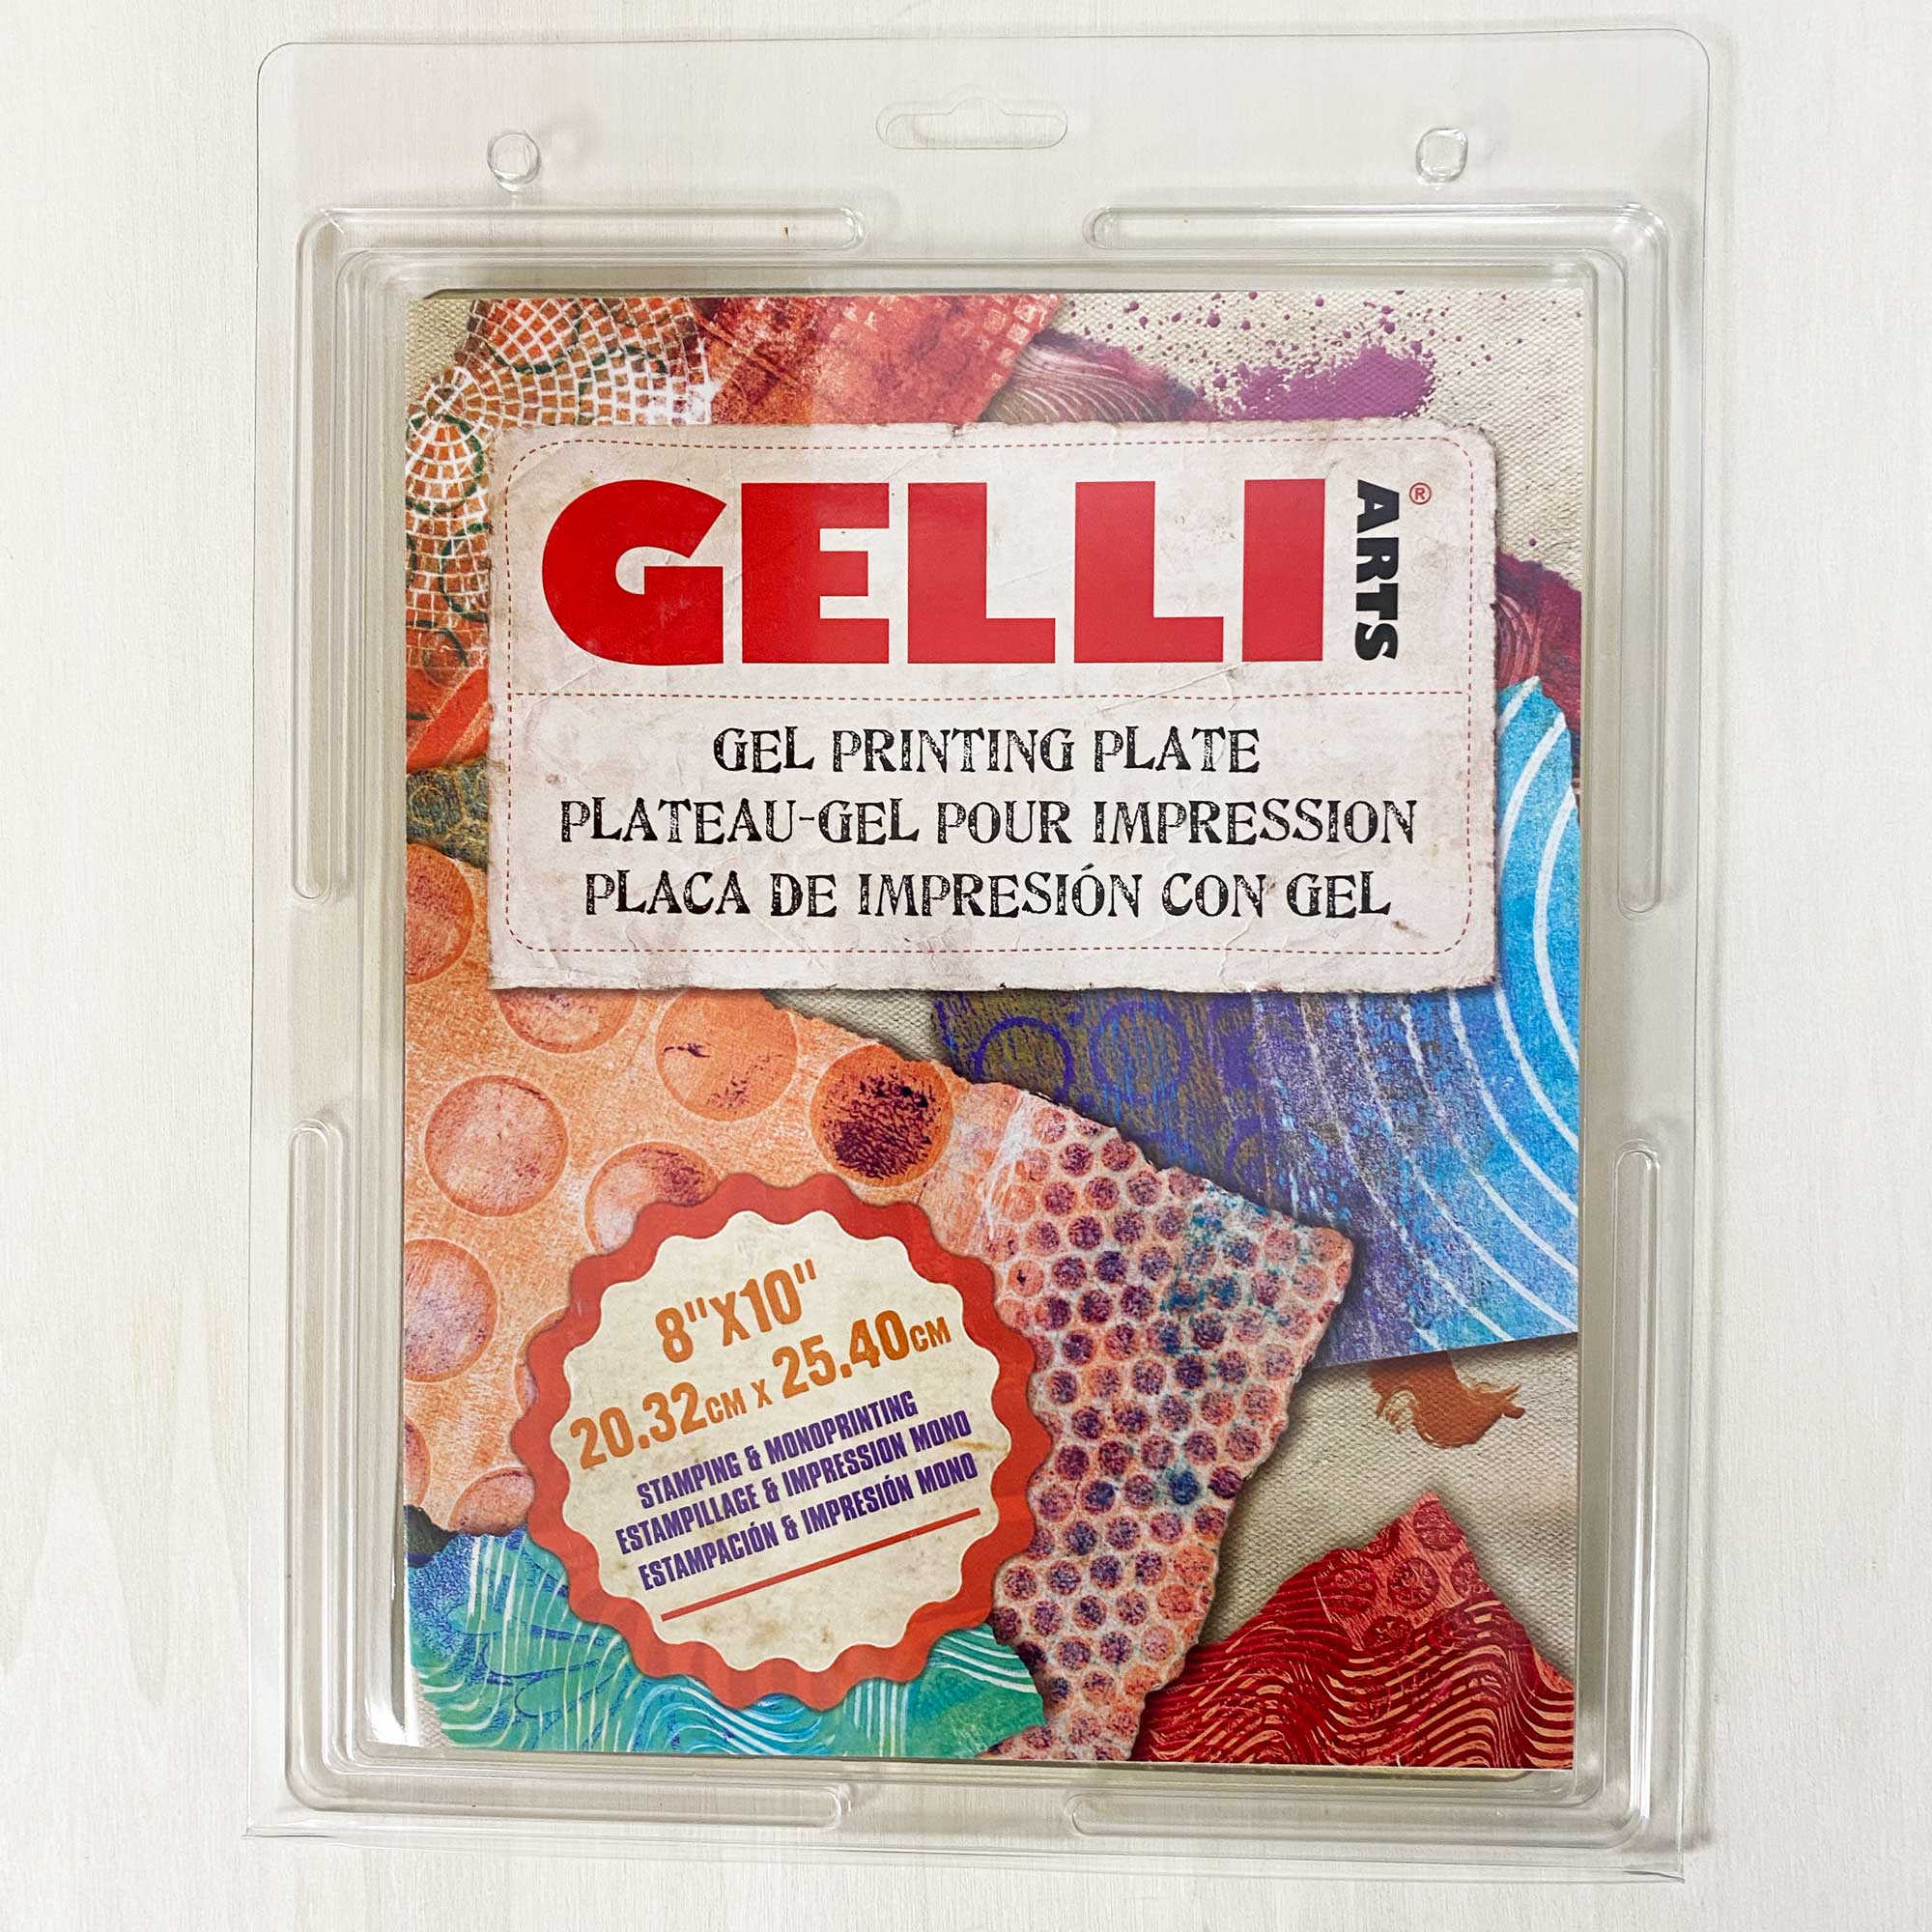 Gel Press Monoprinting Print Plate - 12” X 14” (30.48 X 35.56 cm) Gel Plate  - Printmaking Supplies - Reusable Gel Printing Plate for Press Art for Card  Making, Scrapbooking, Journaling, Arts